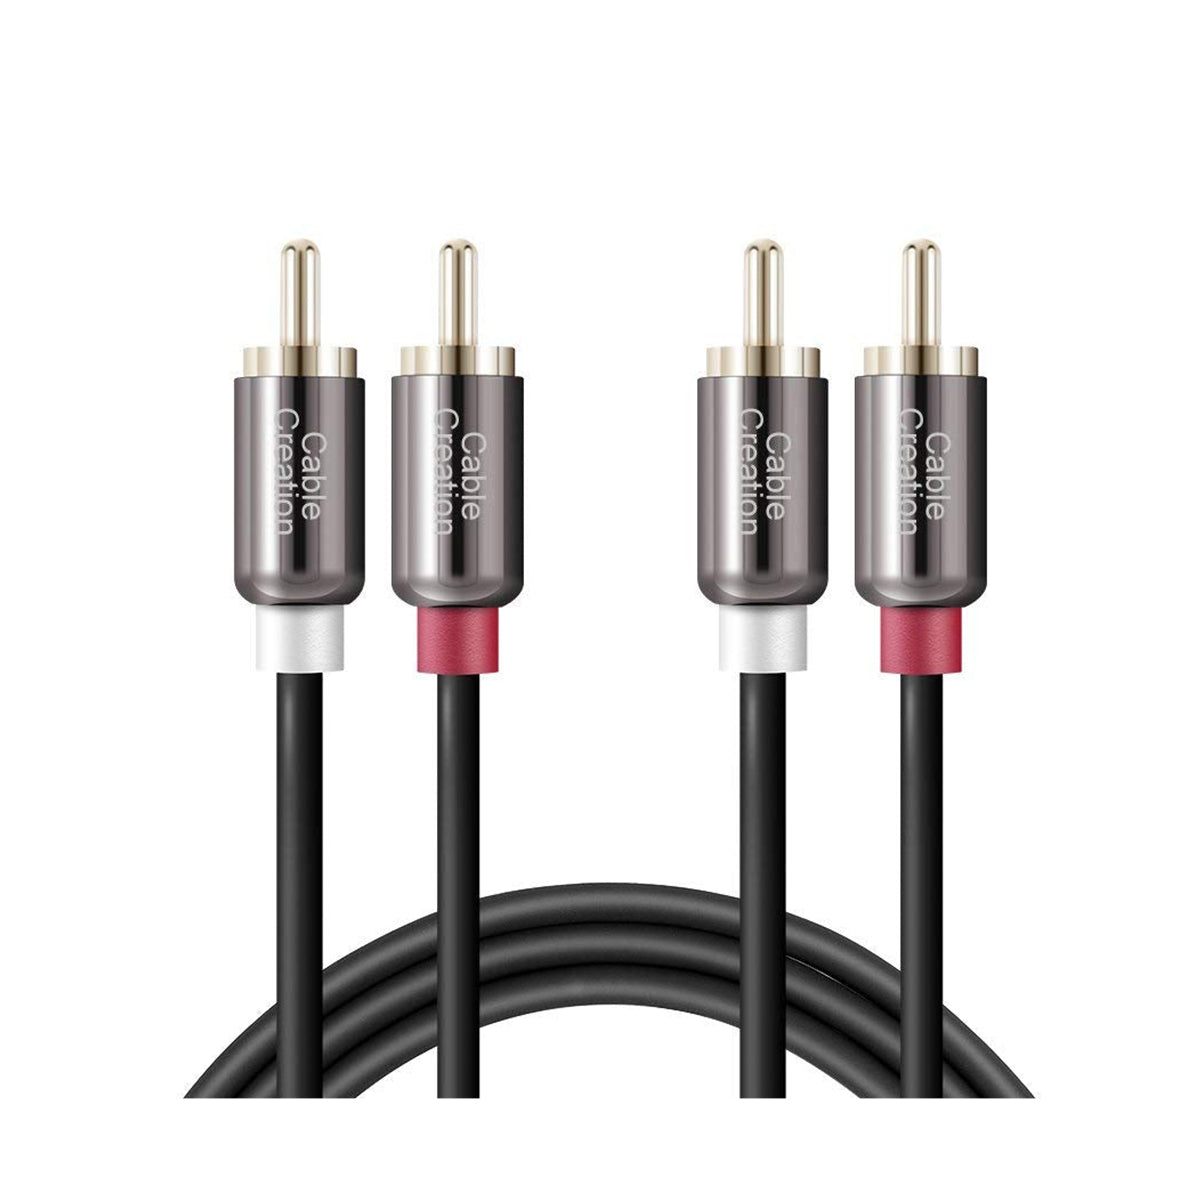 Cable Auxiliar Plug 3.5 mm Hembra A 2 Rca Macho OEM